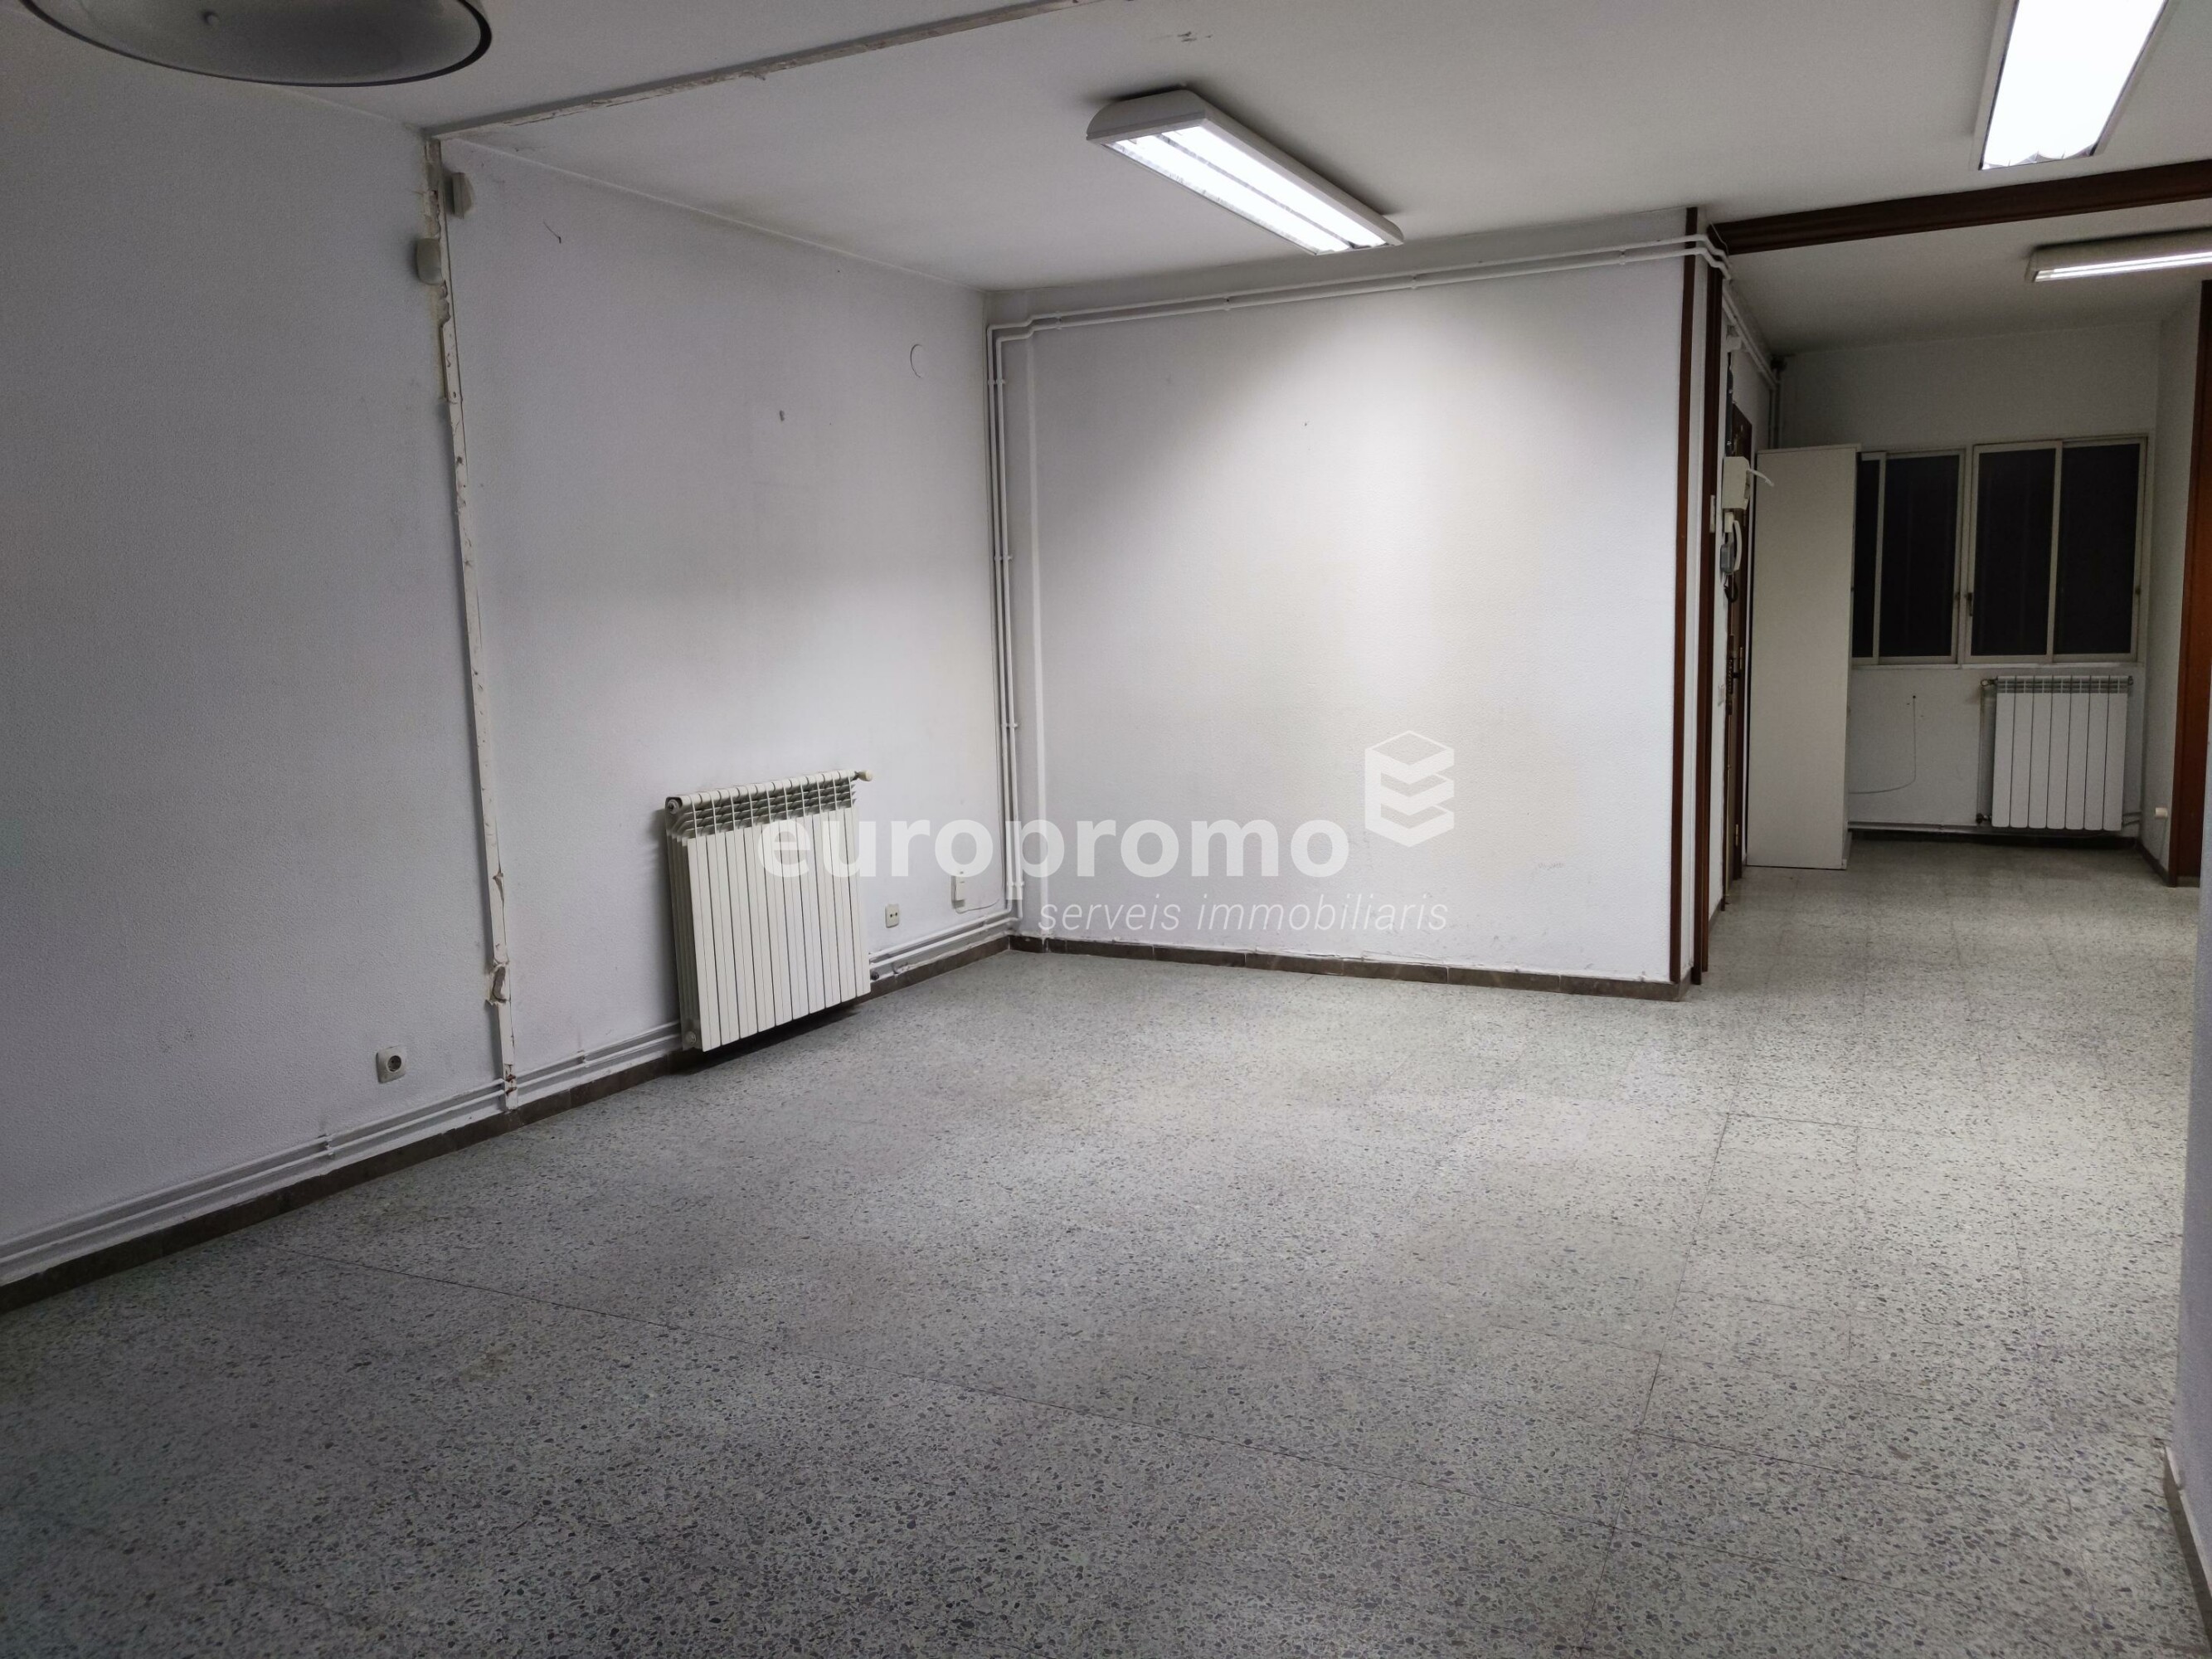 Oficina de 60 m2 en el centro de Girona- Jaume I